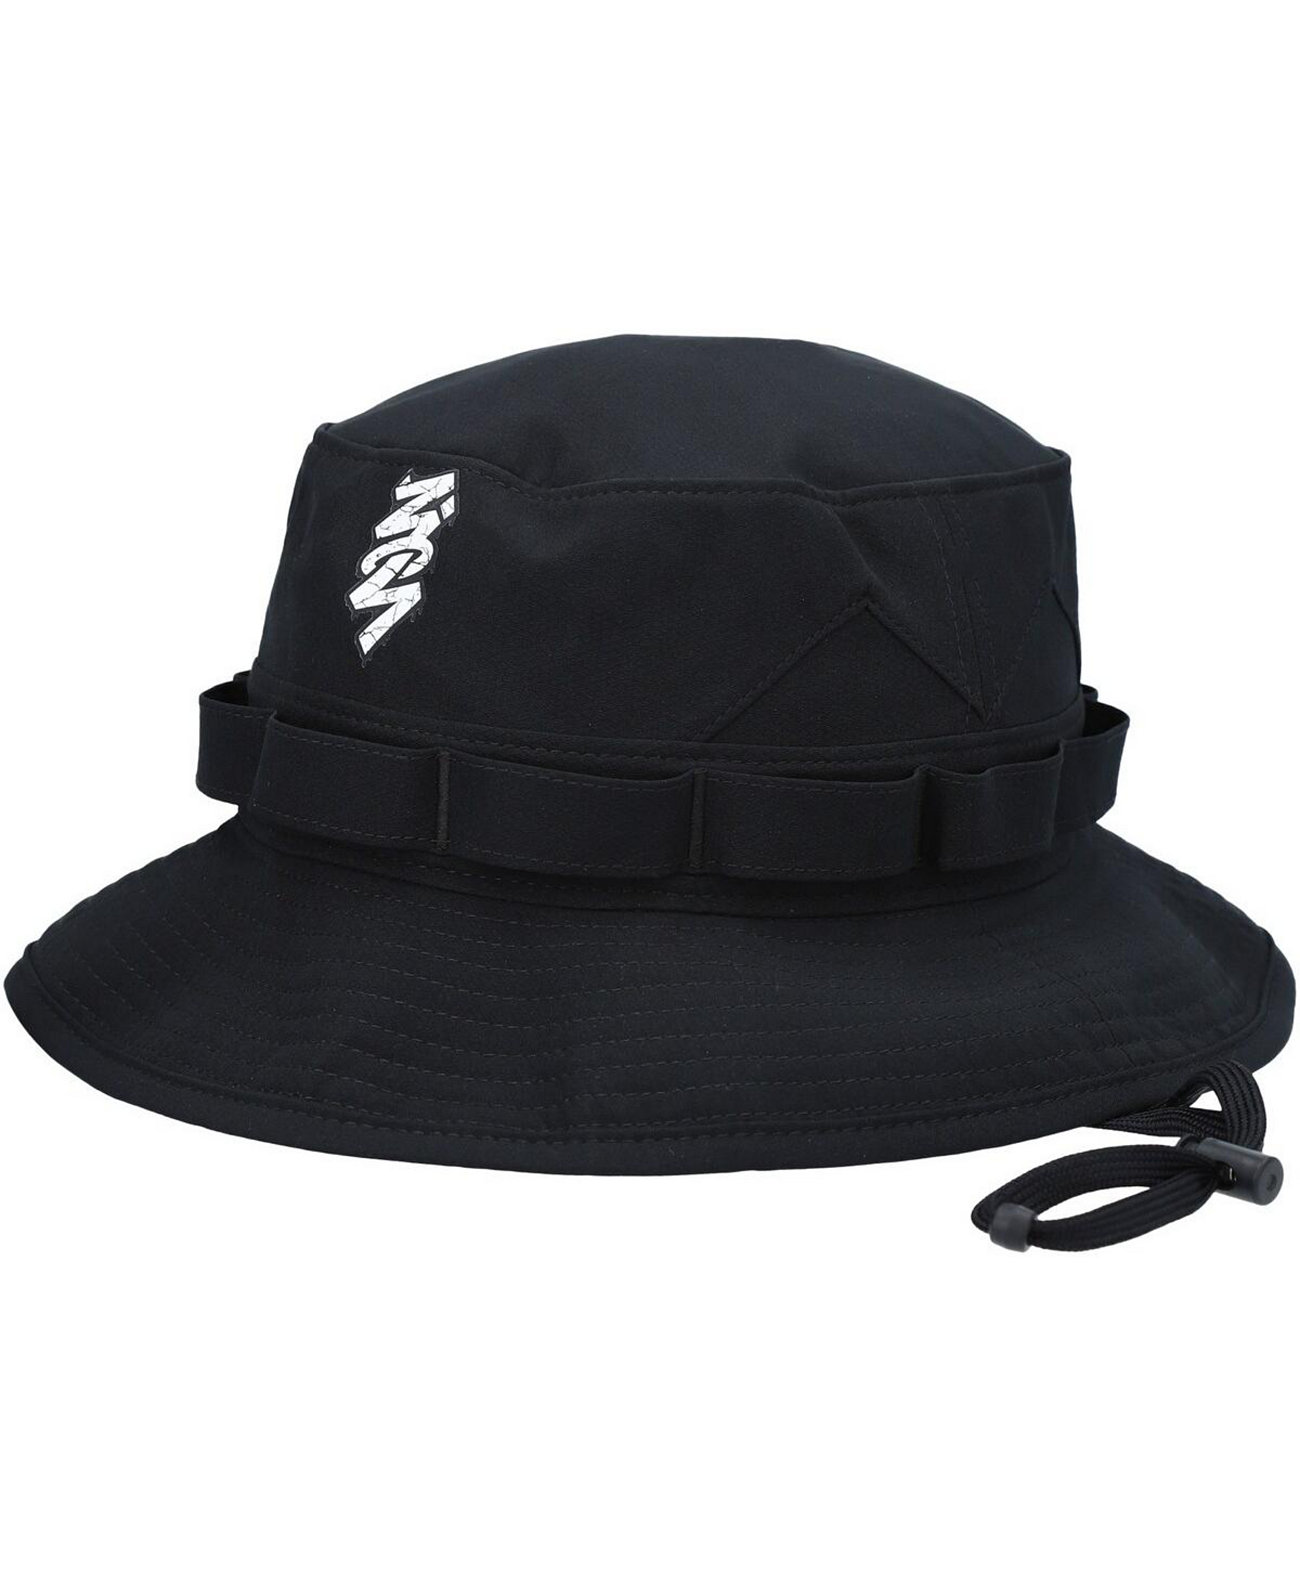 Мужская черная шляпа-ведро Zion Jordan